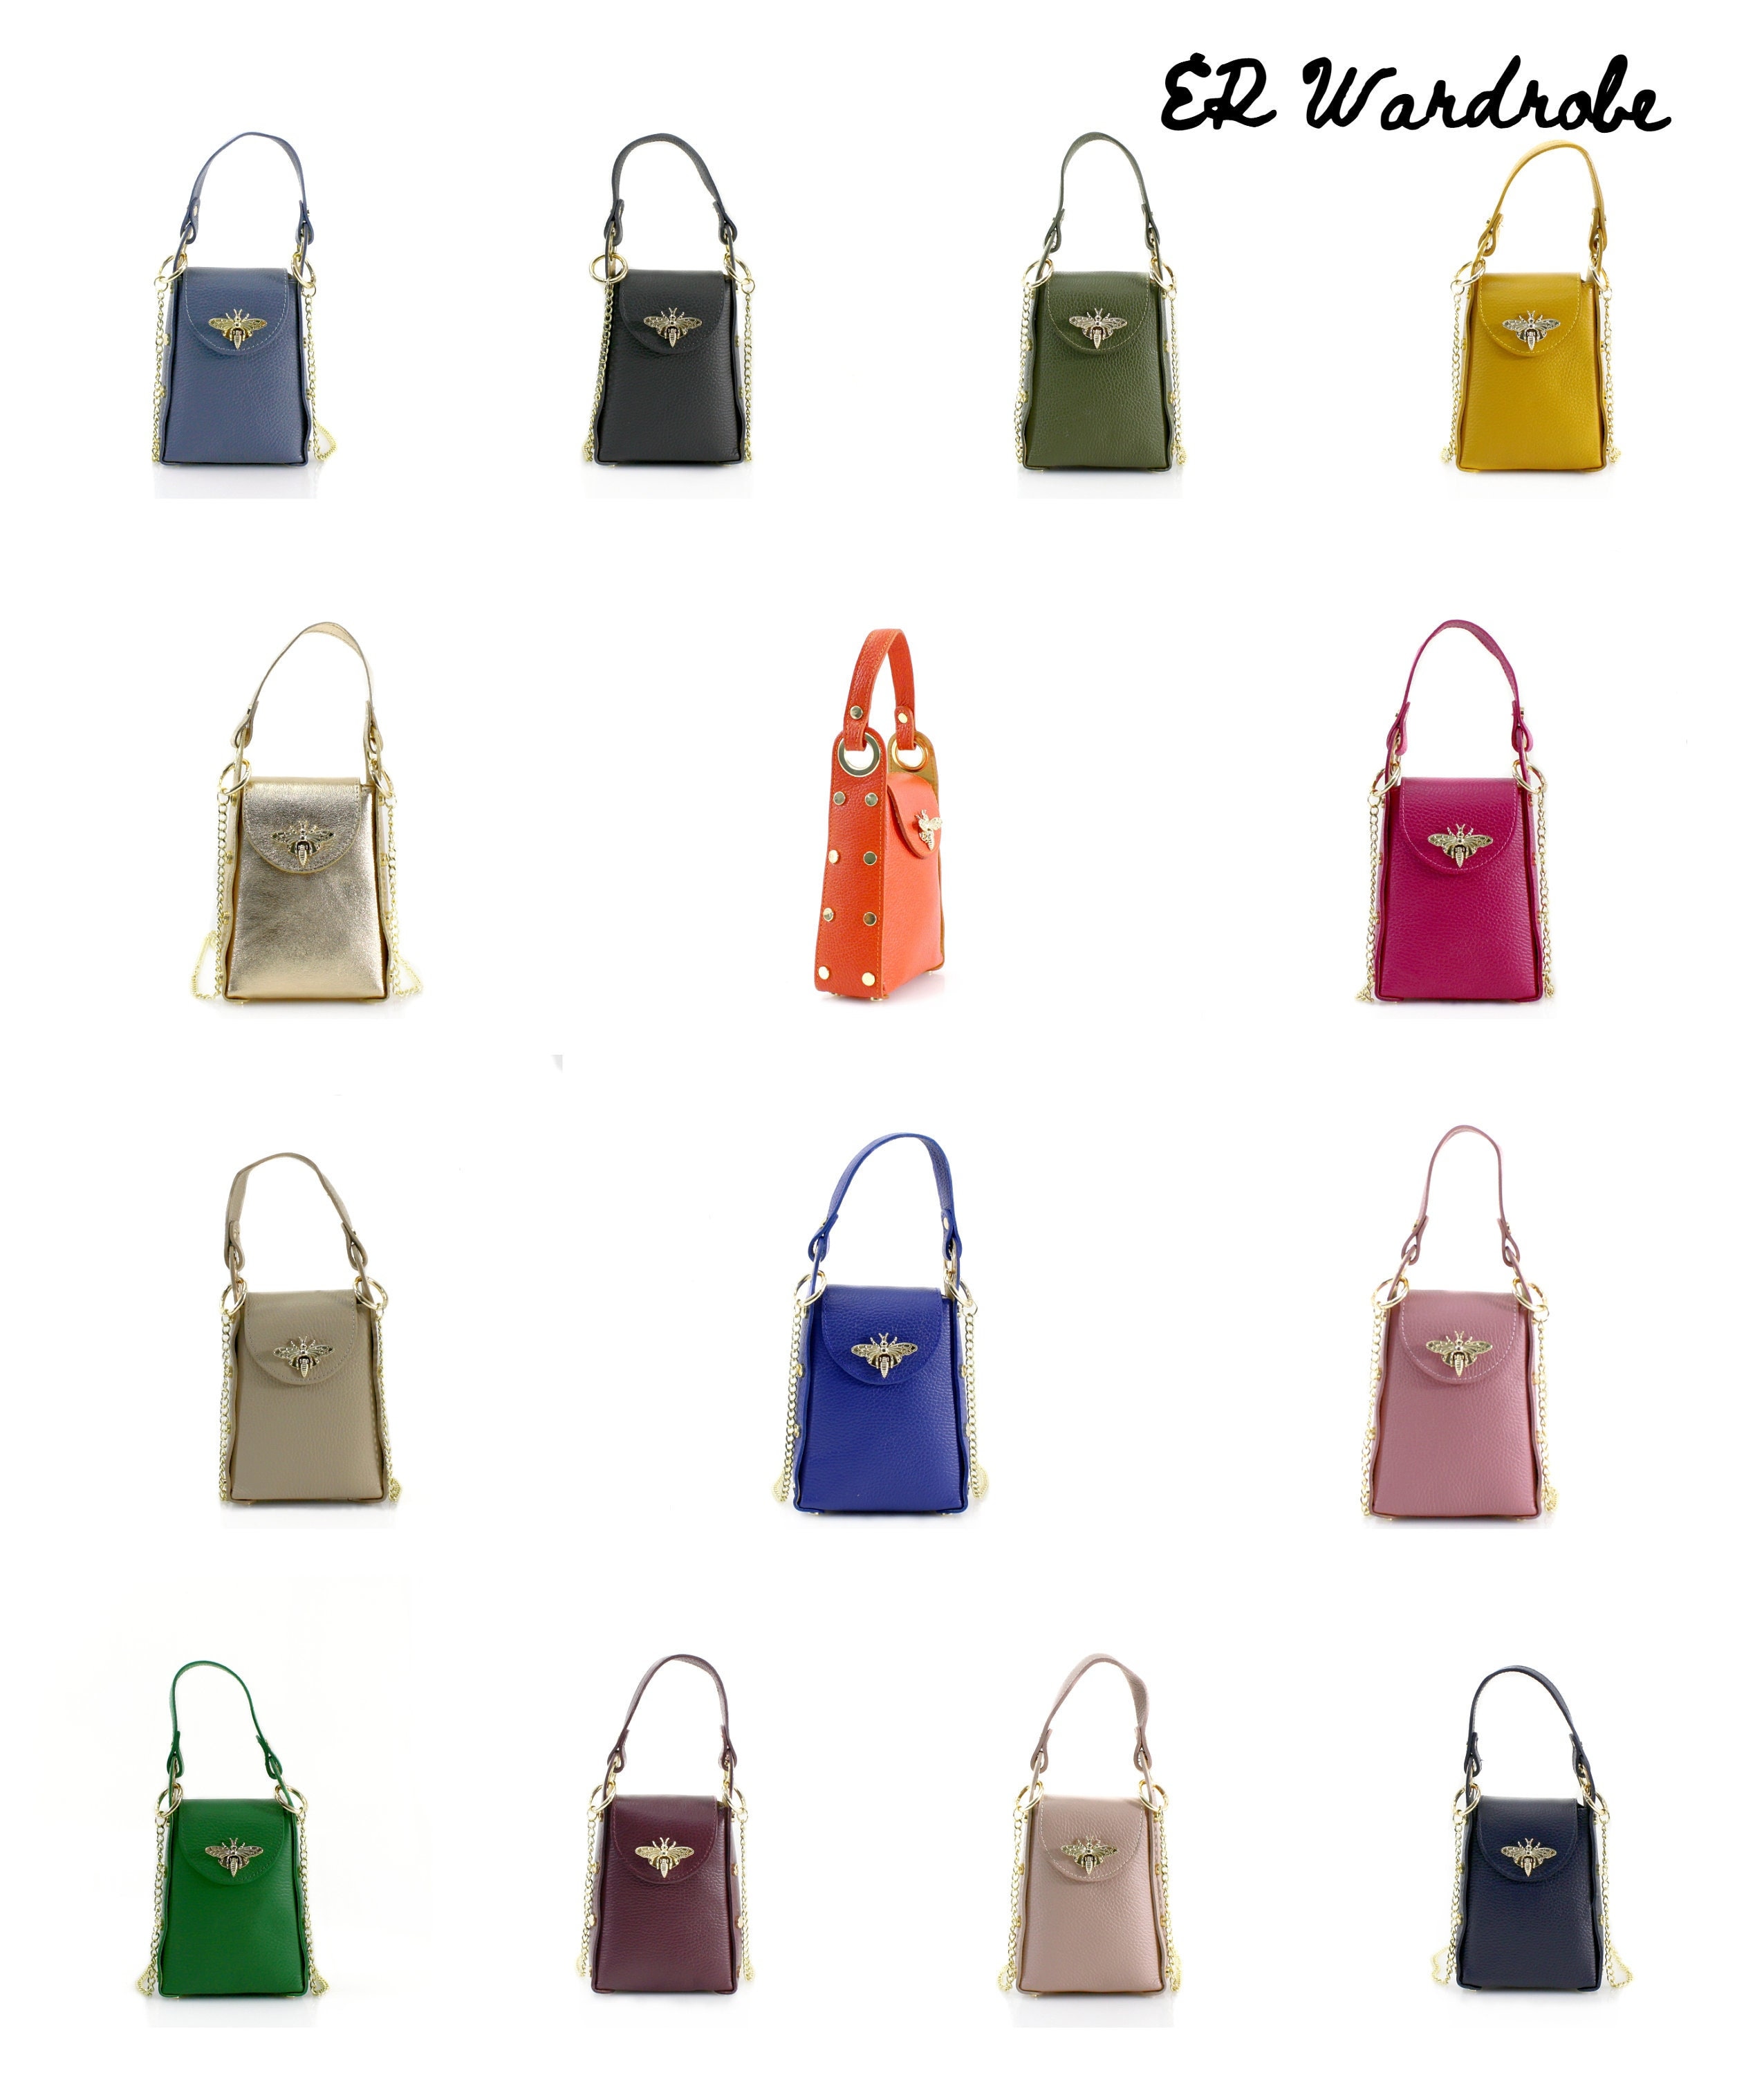 Prada Women's Small Logo Pebbled Leather Crossbody Bag